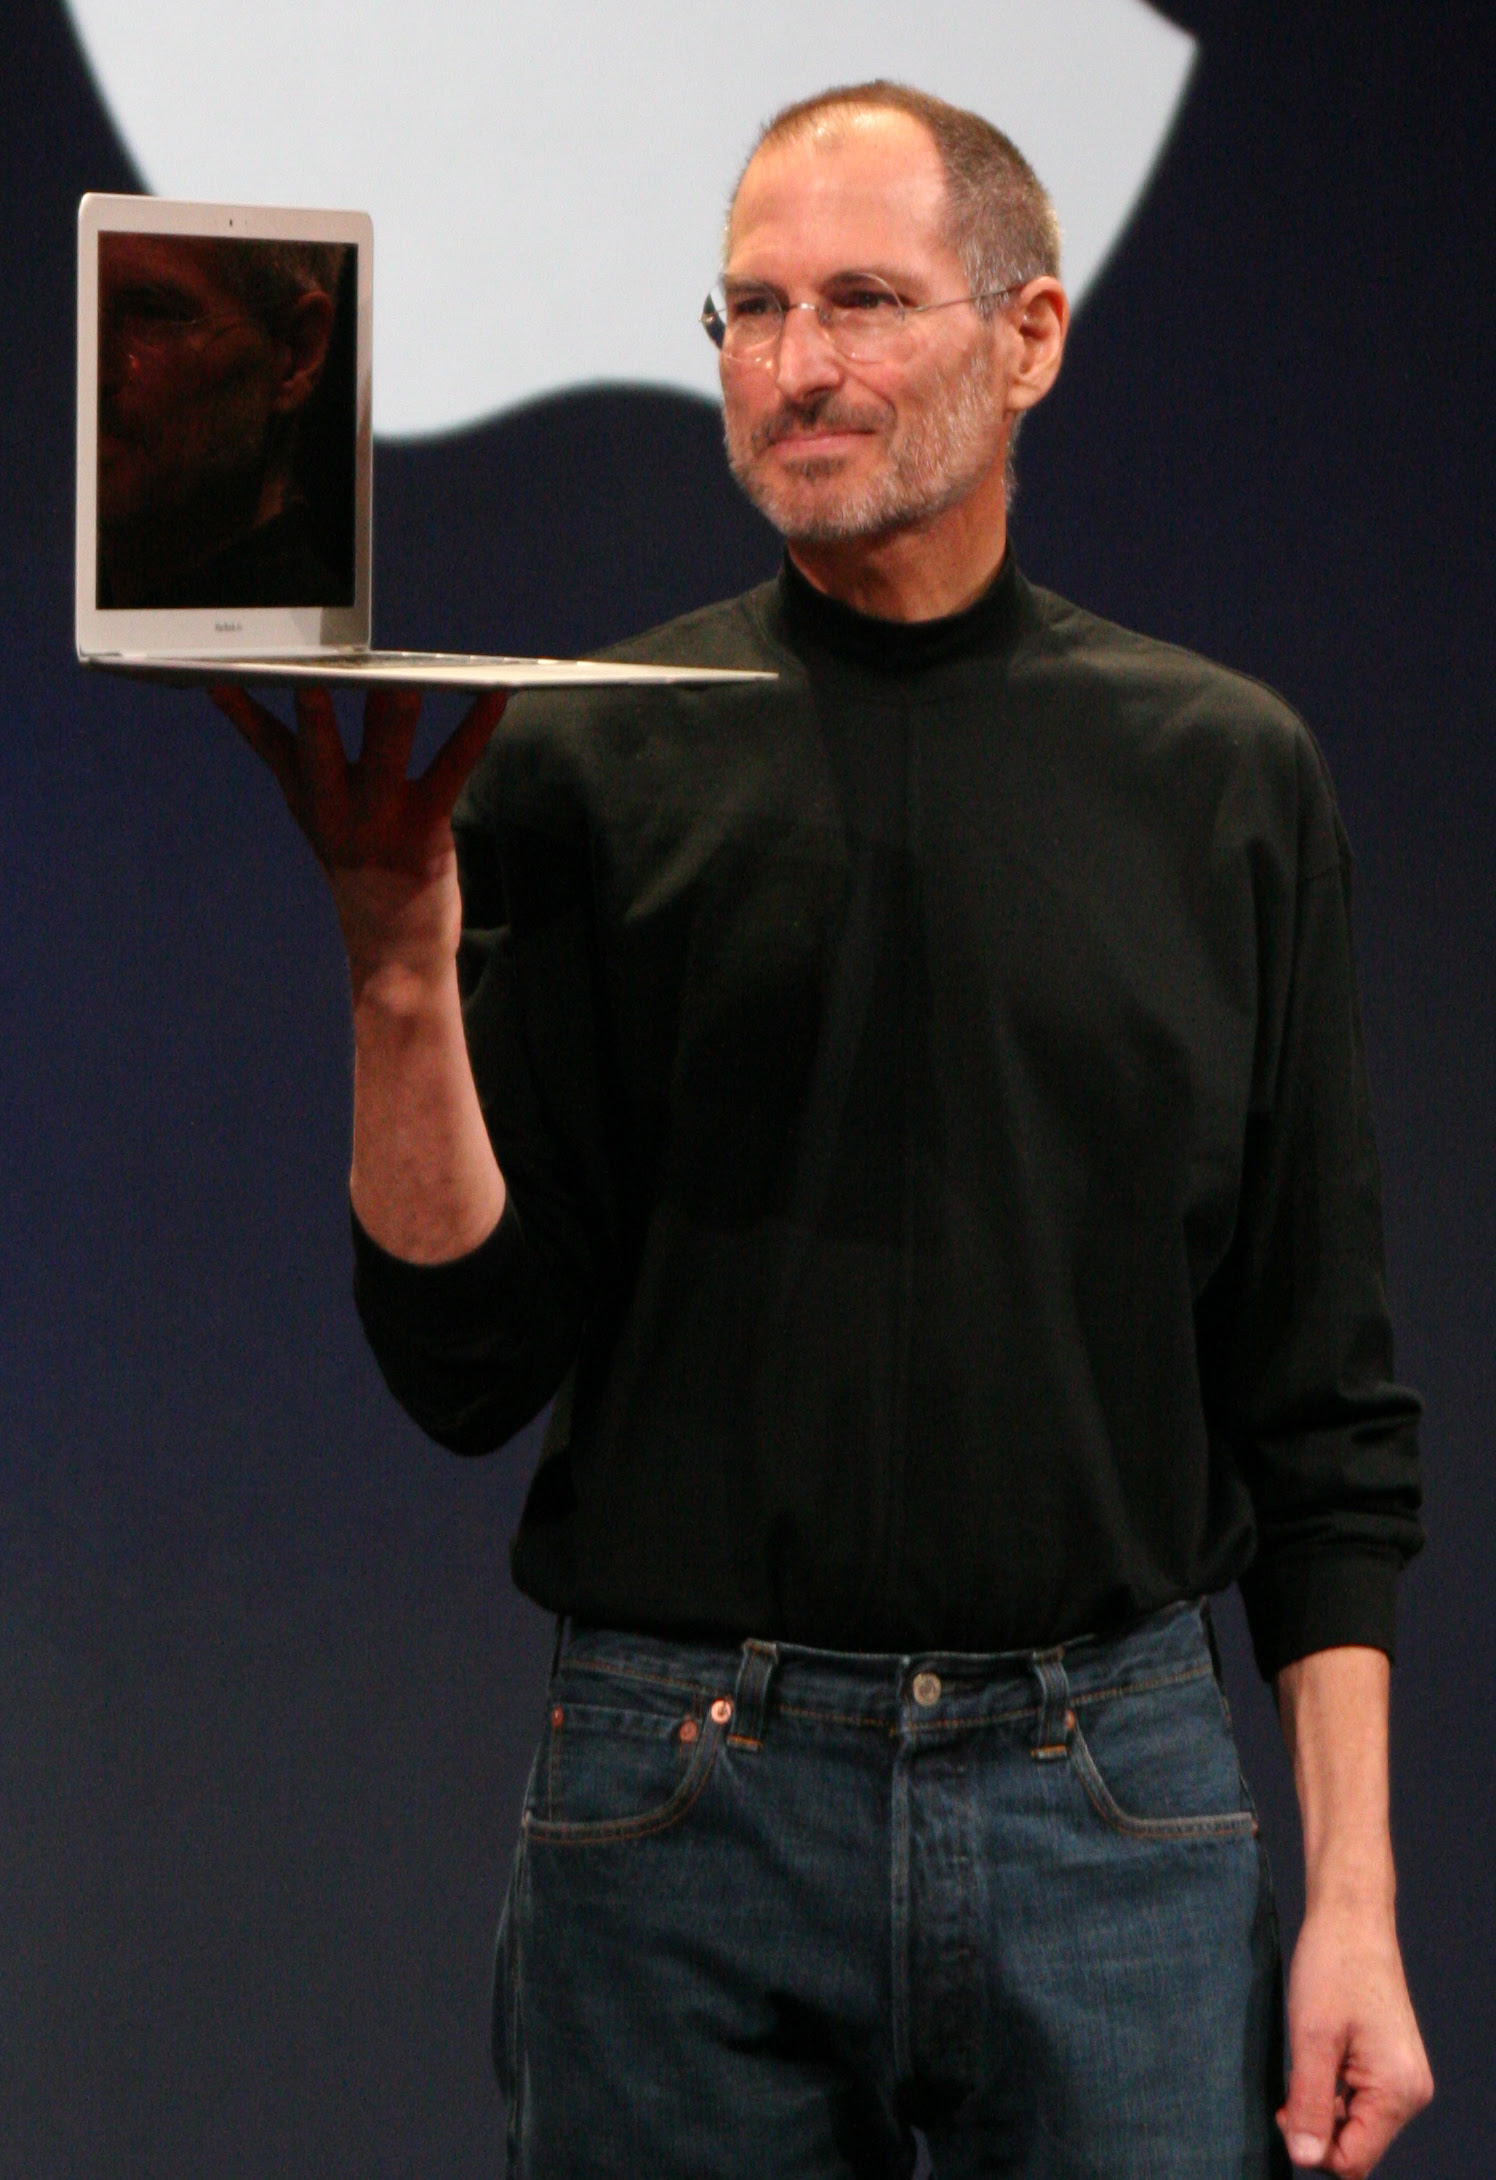 Wikimedia picture of Steve Jobs